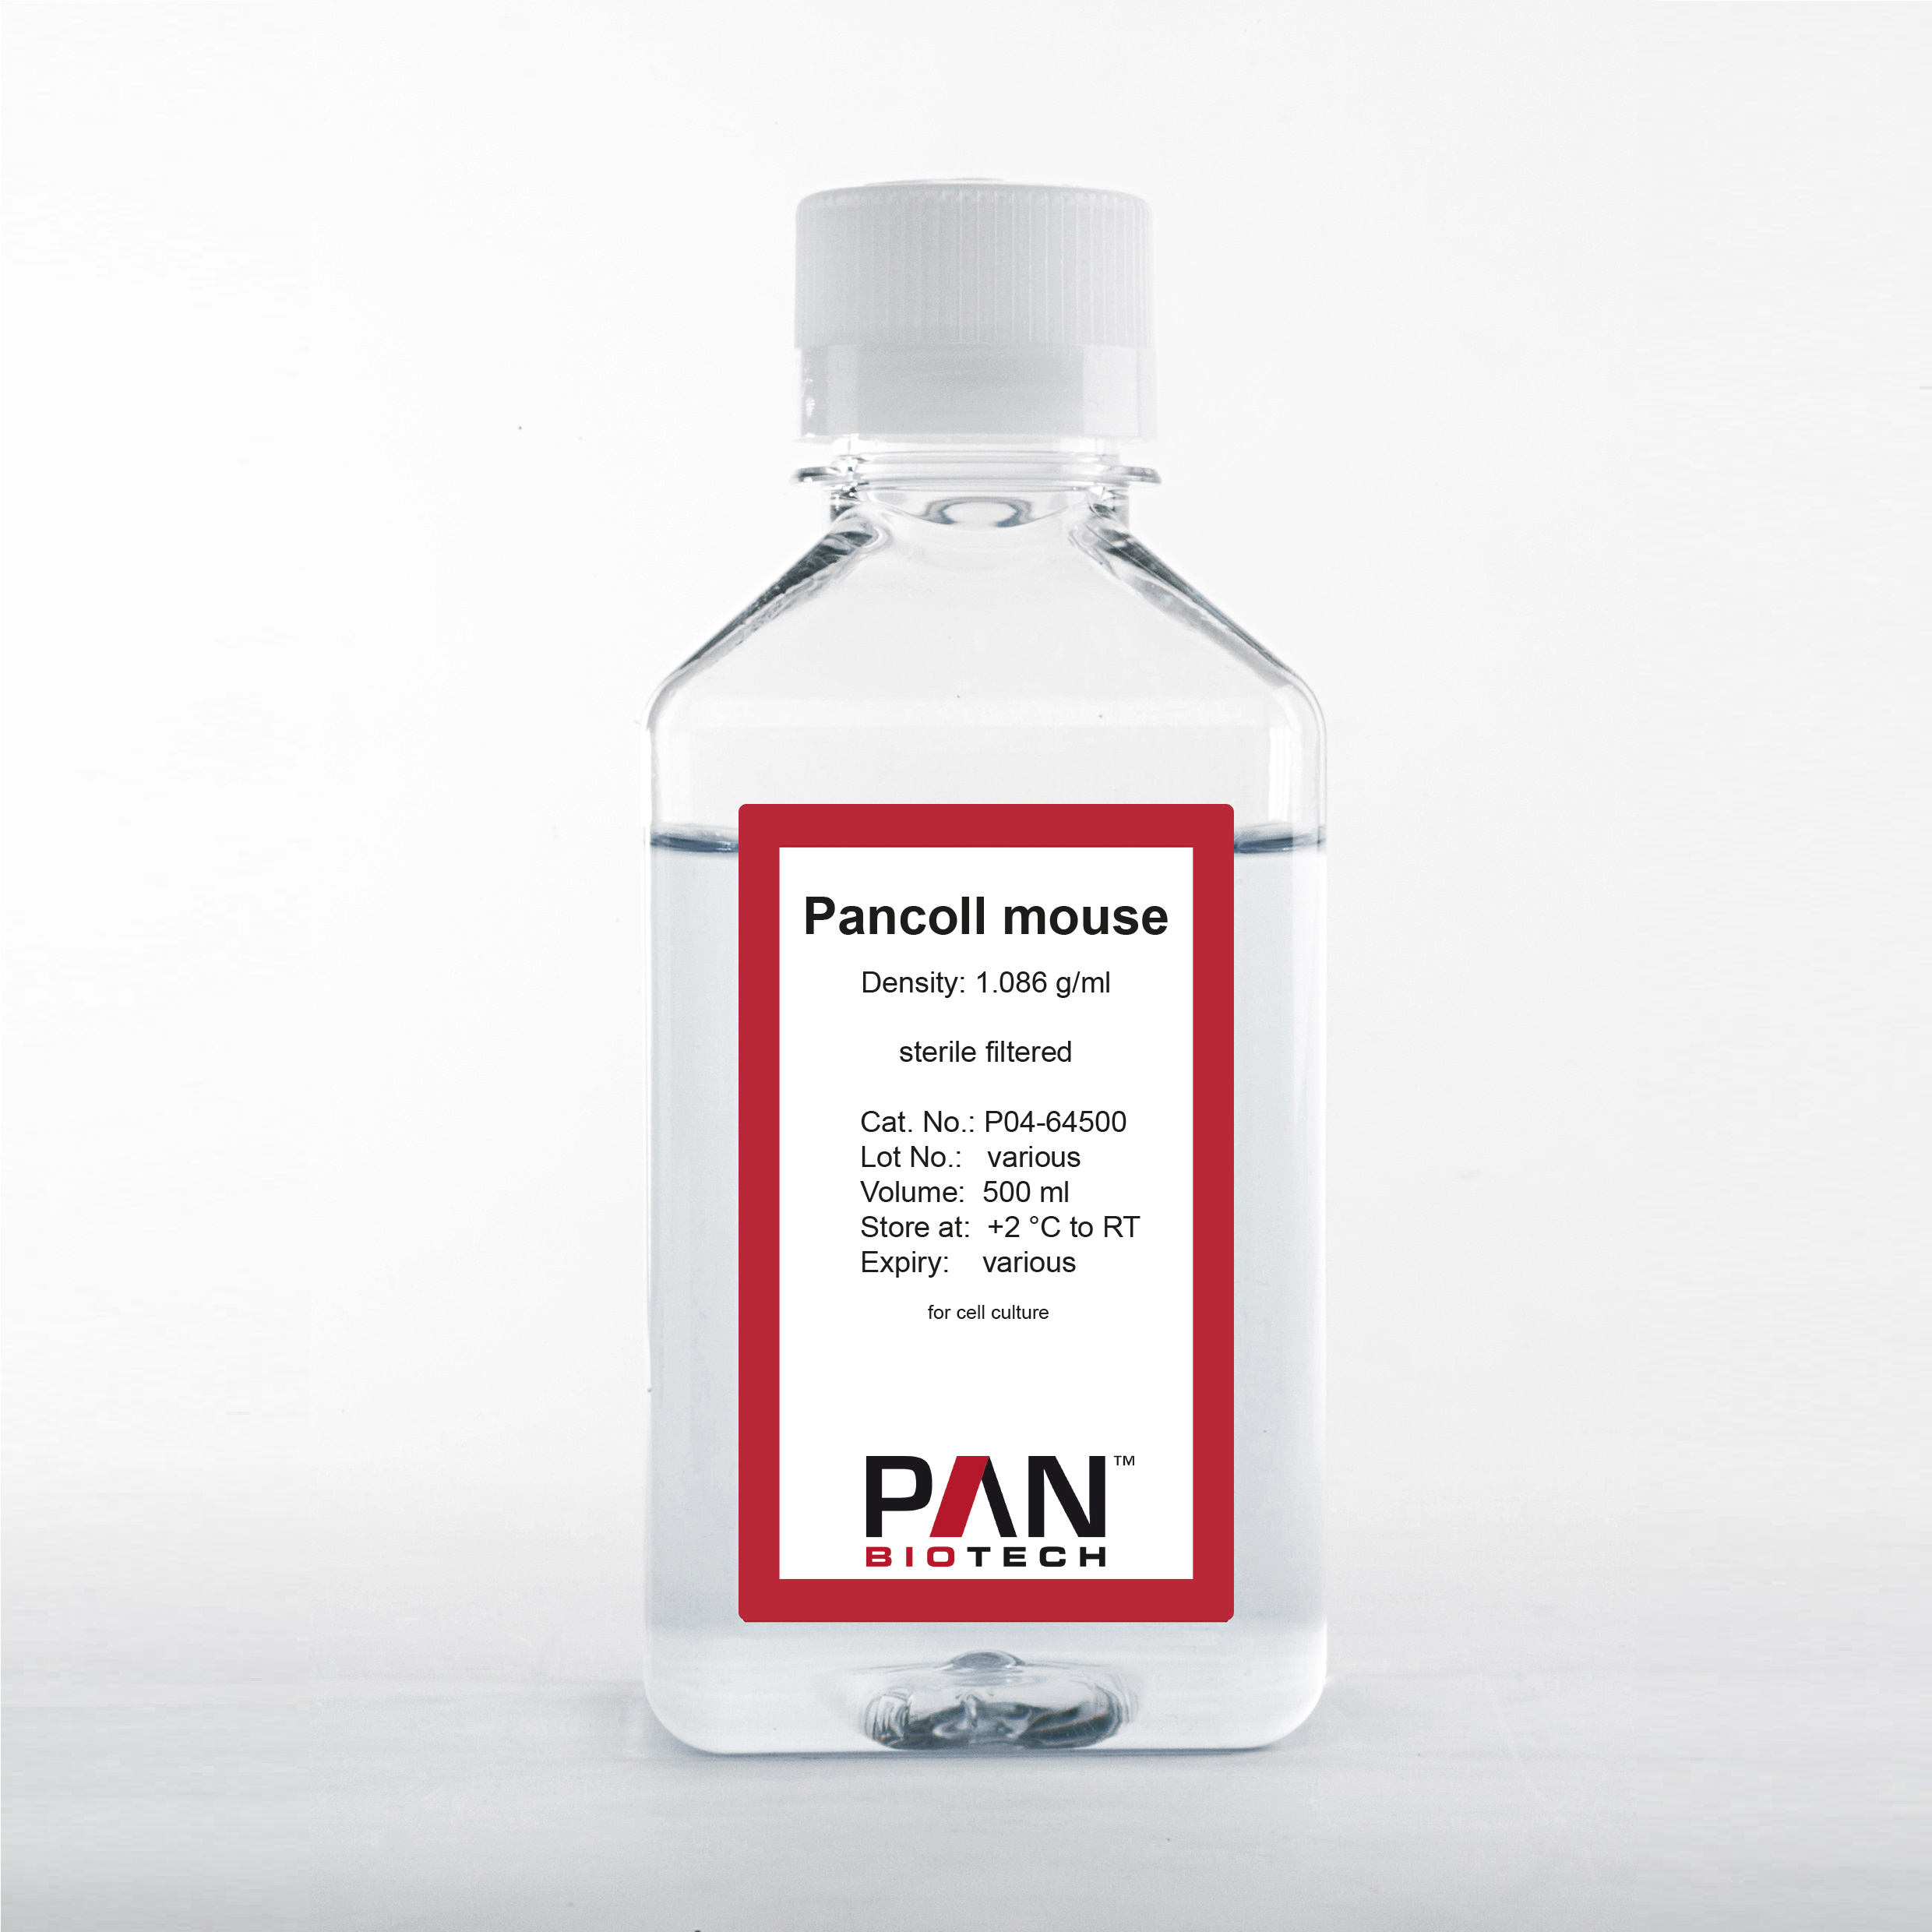 Pancoll mouse, Density: 1.086 g/ml